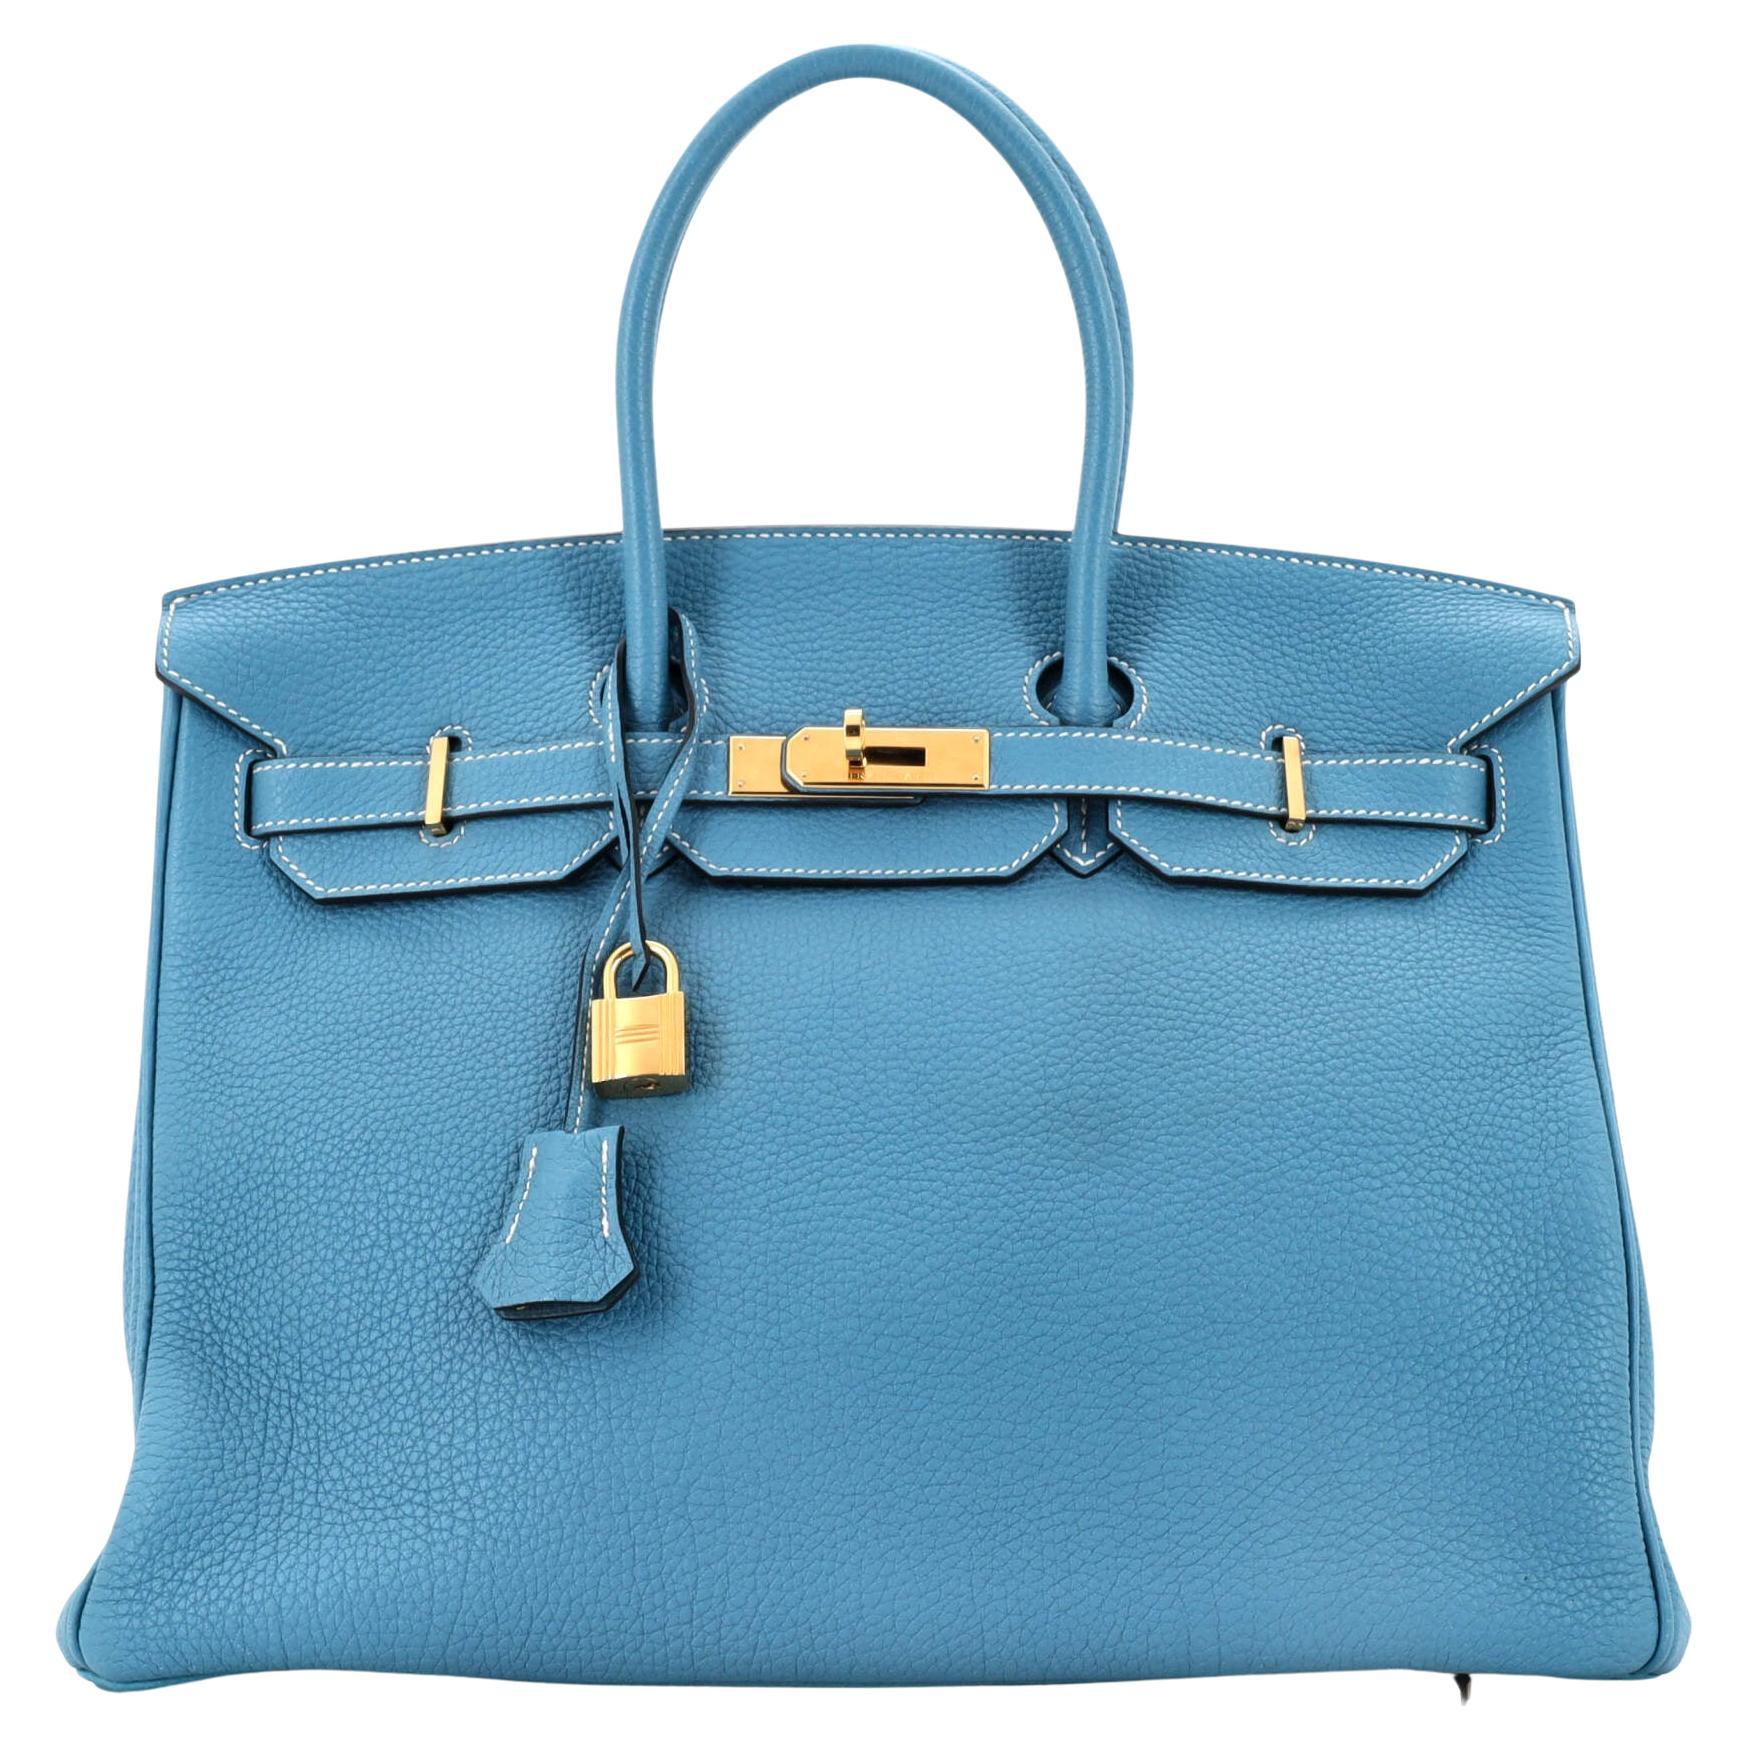 Hermes Birkin Handbag Blue Jean Togo with Gold Hardware 35